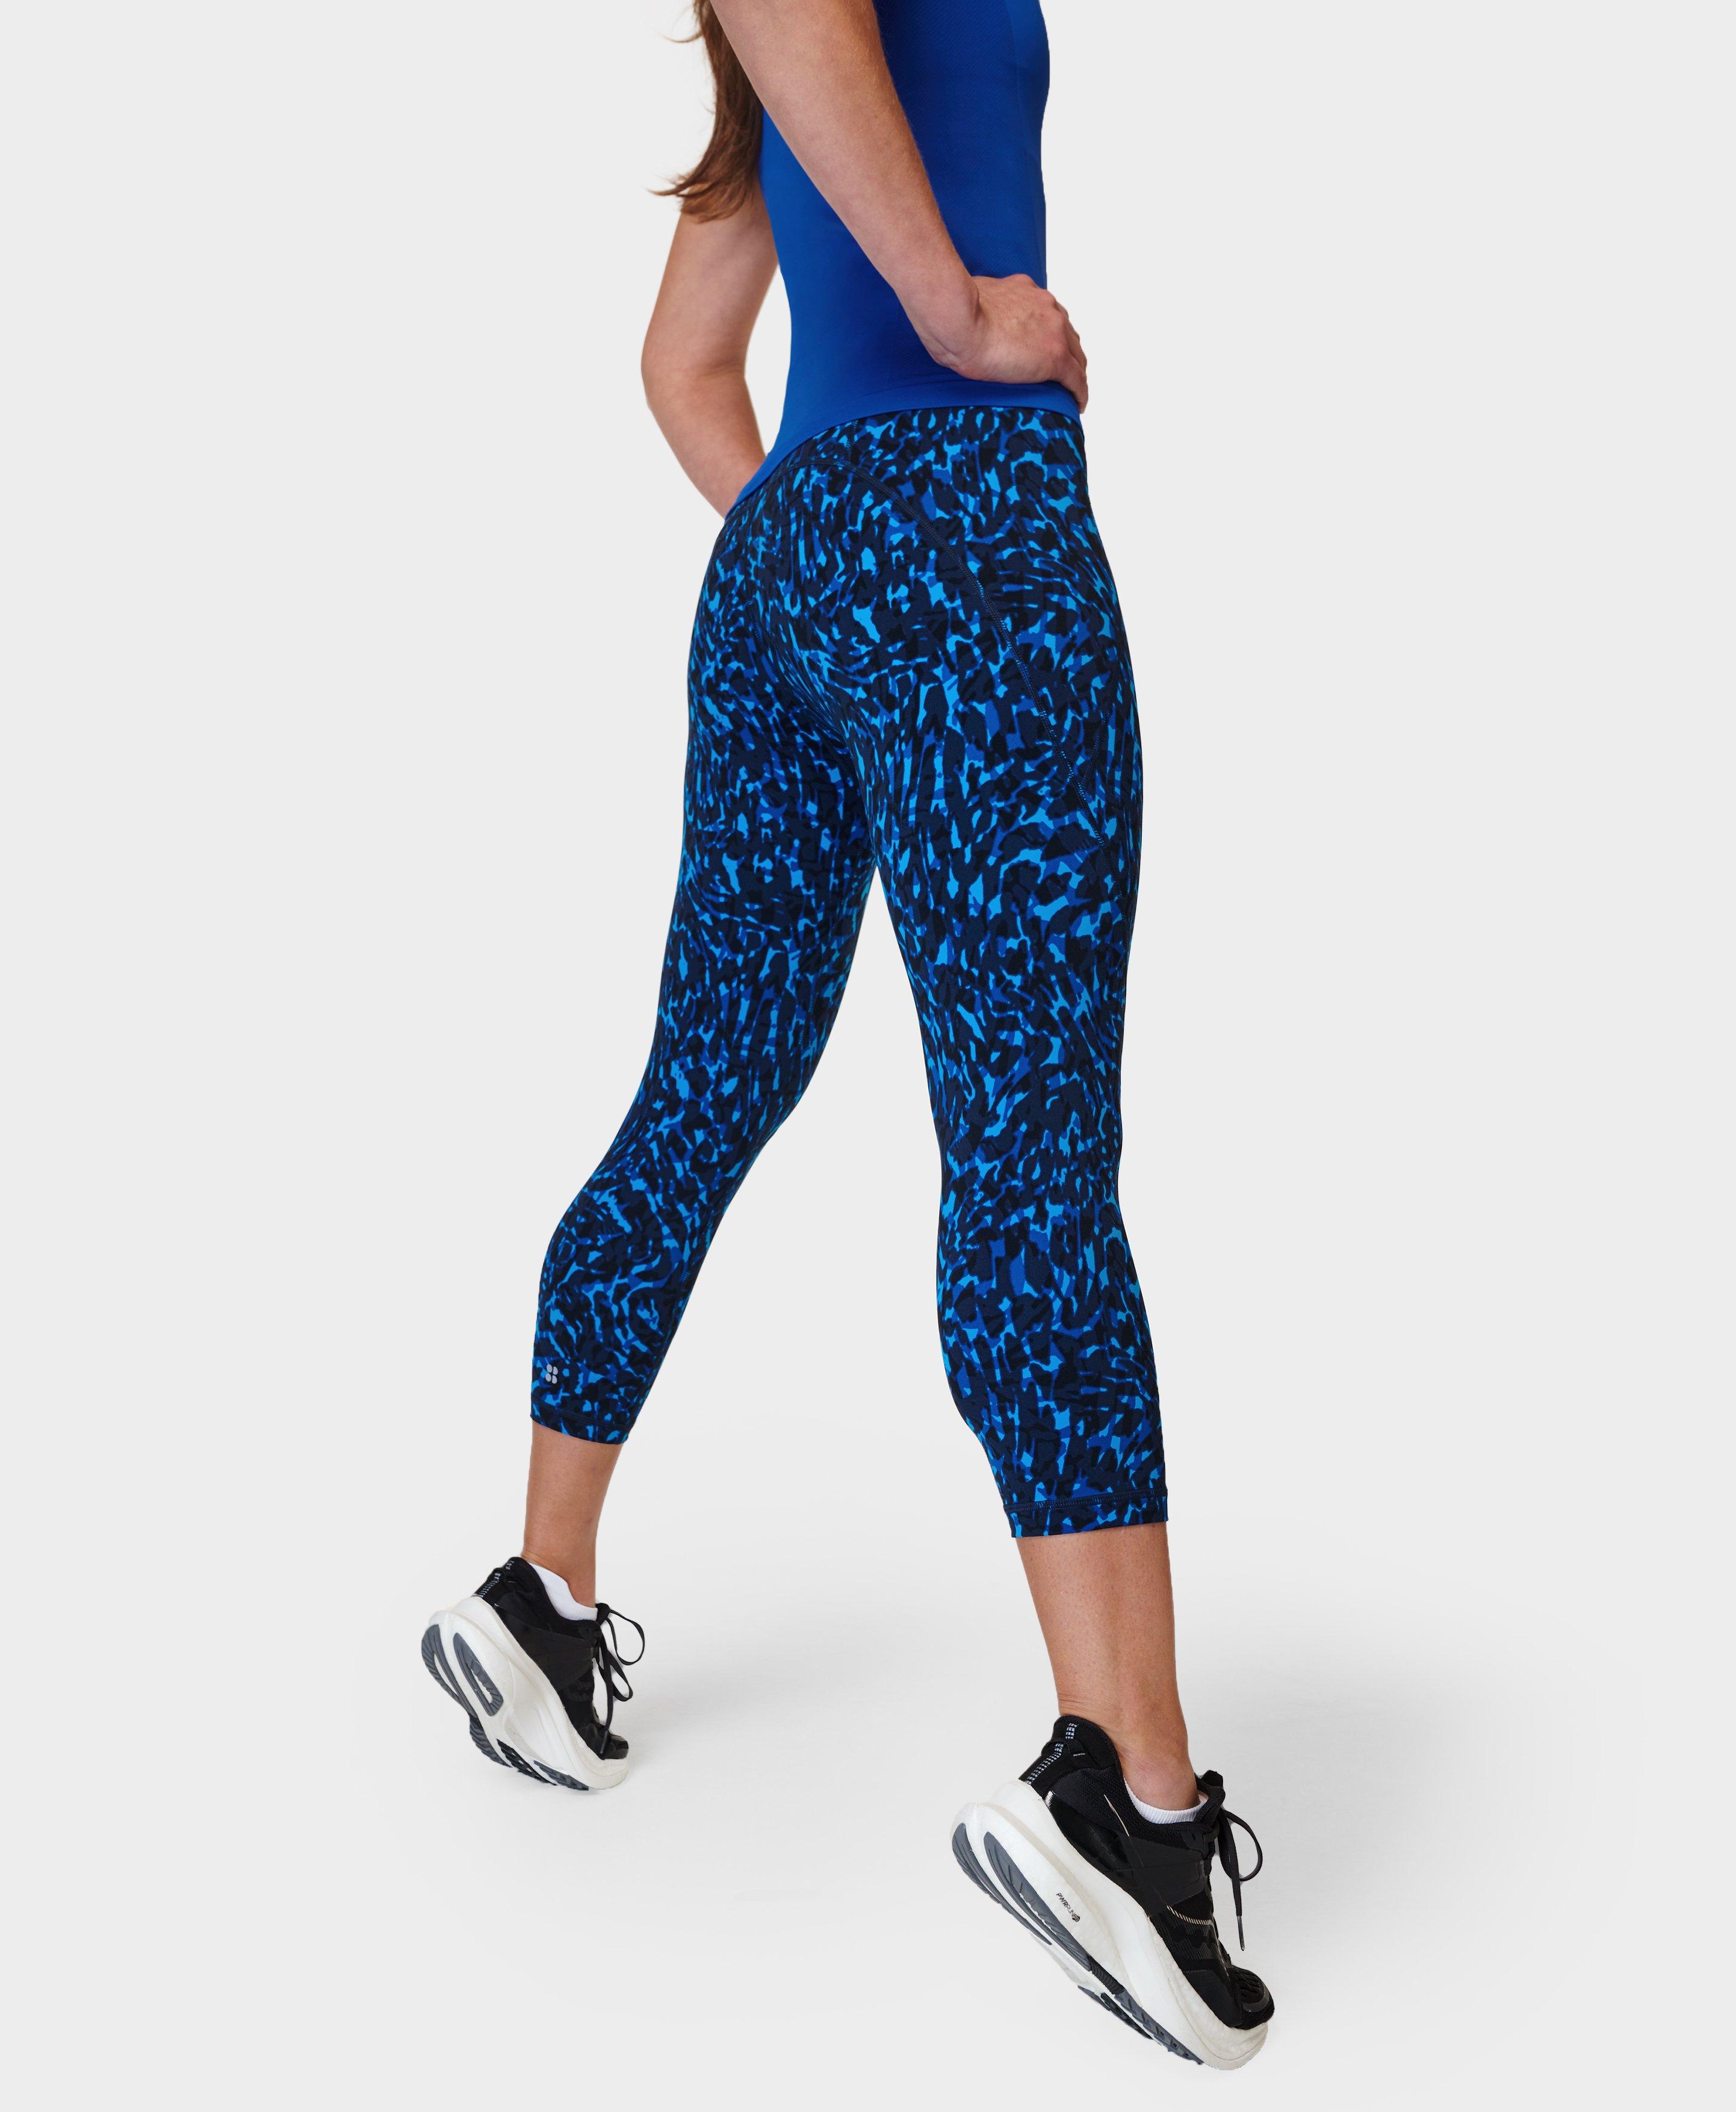 Power Cropped Gym Leggings - Blue Animal Swirl Print, Women's Leggings